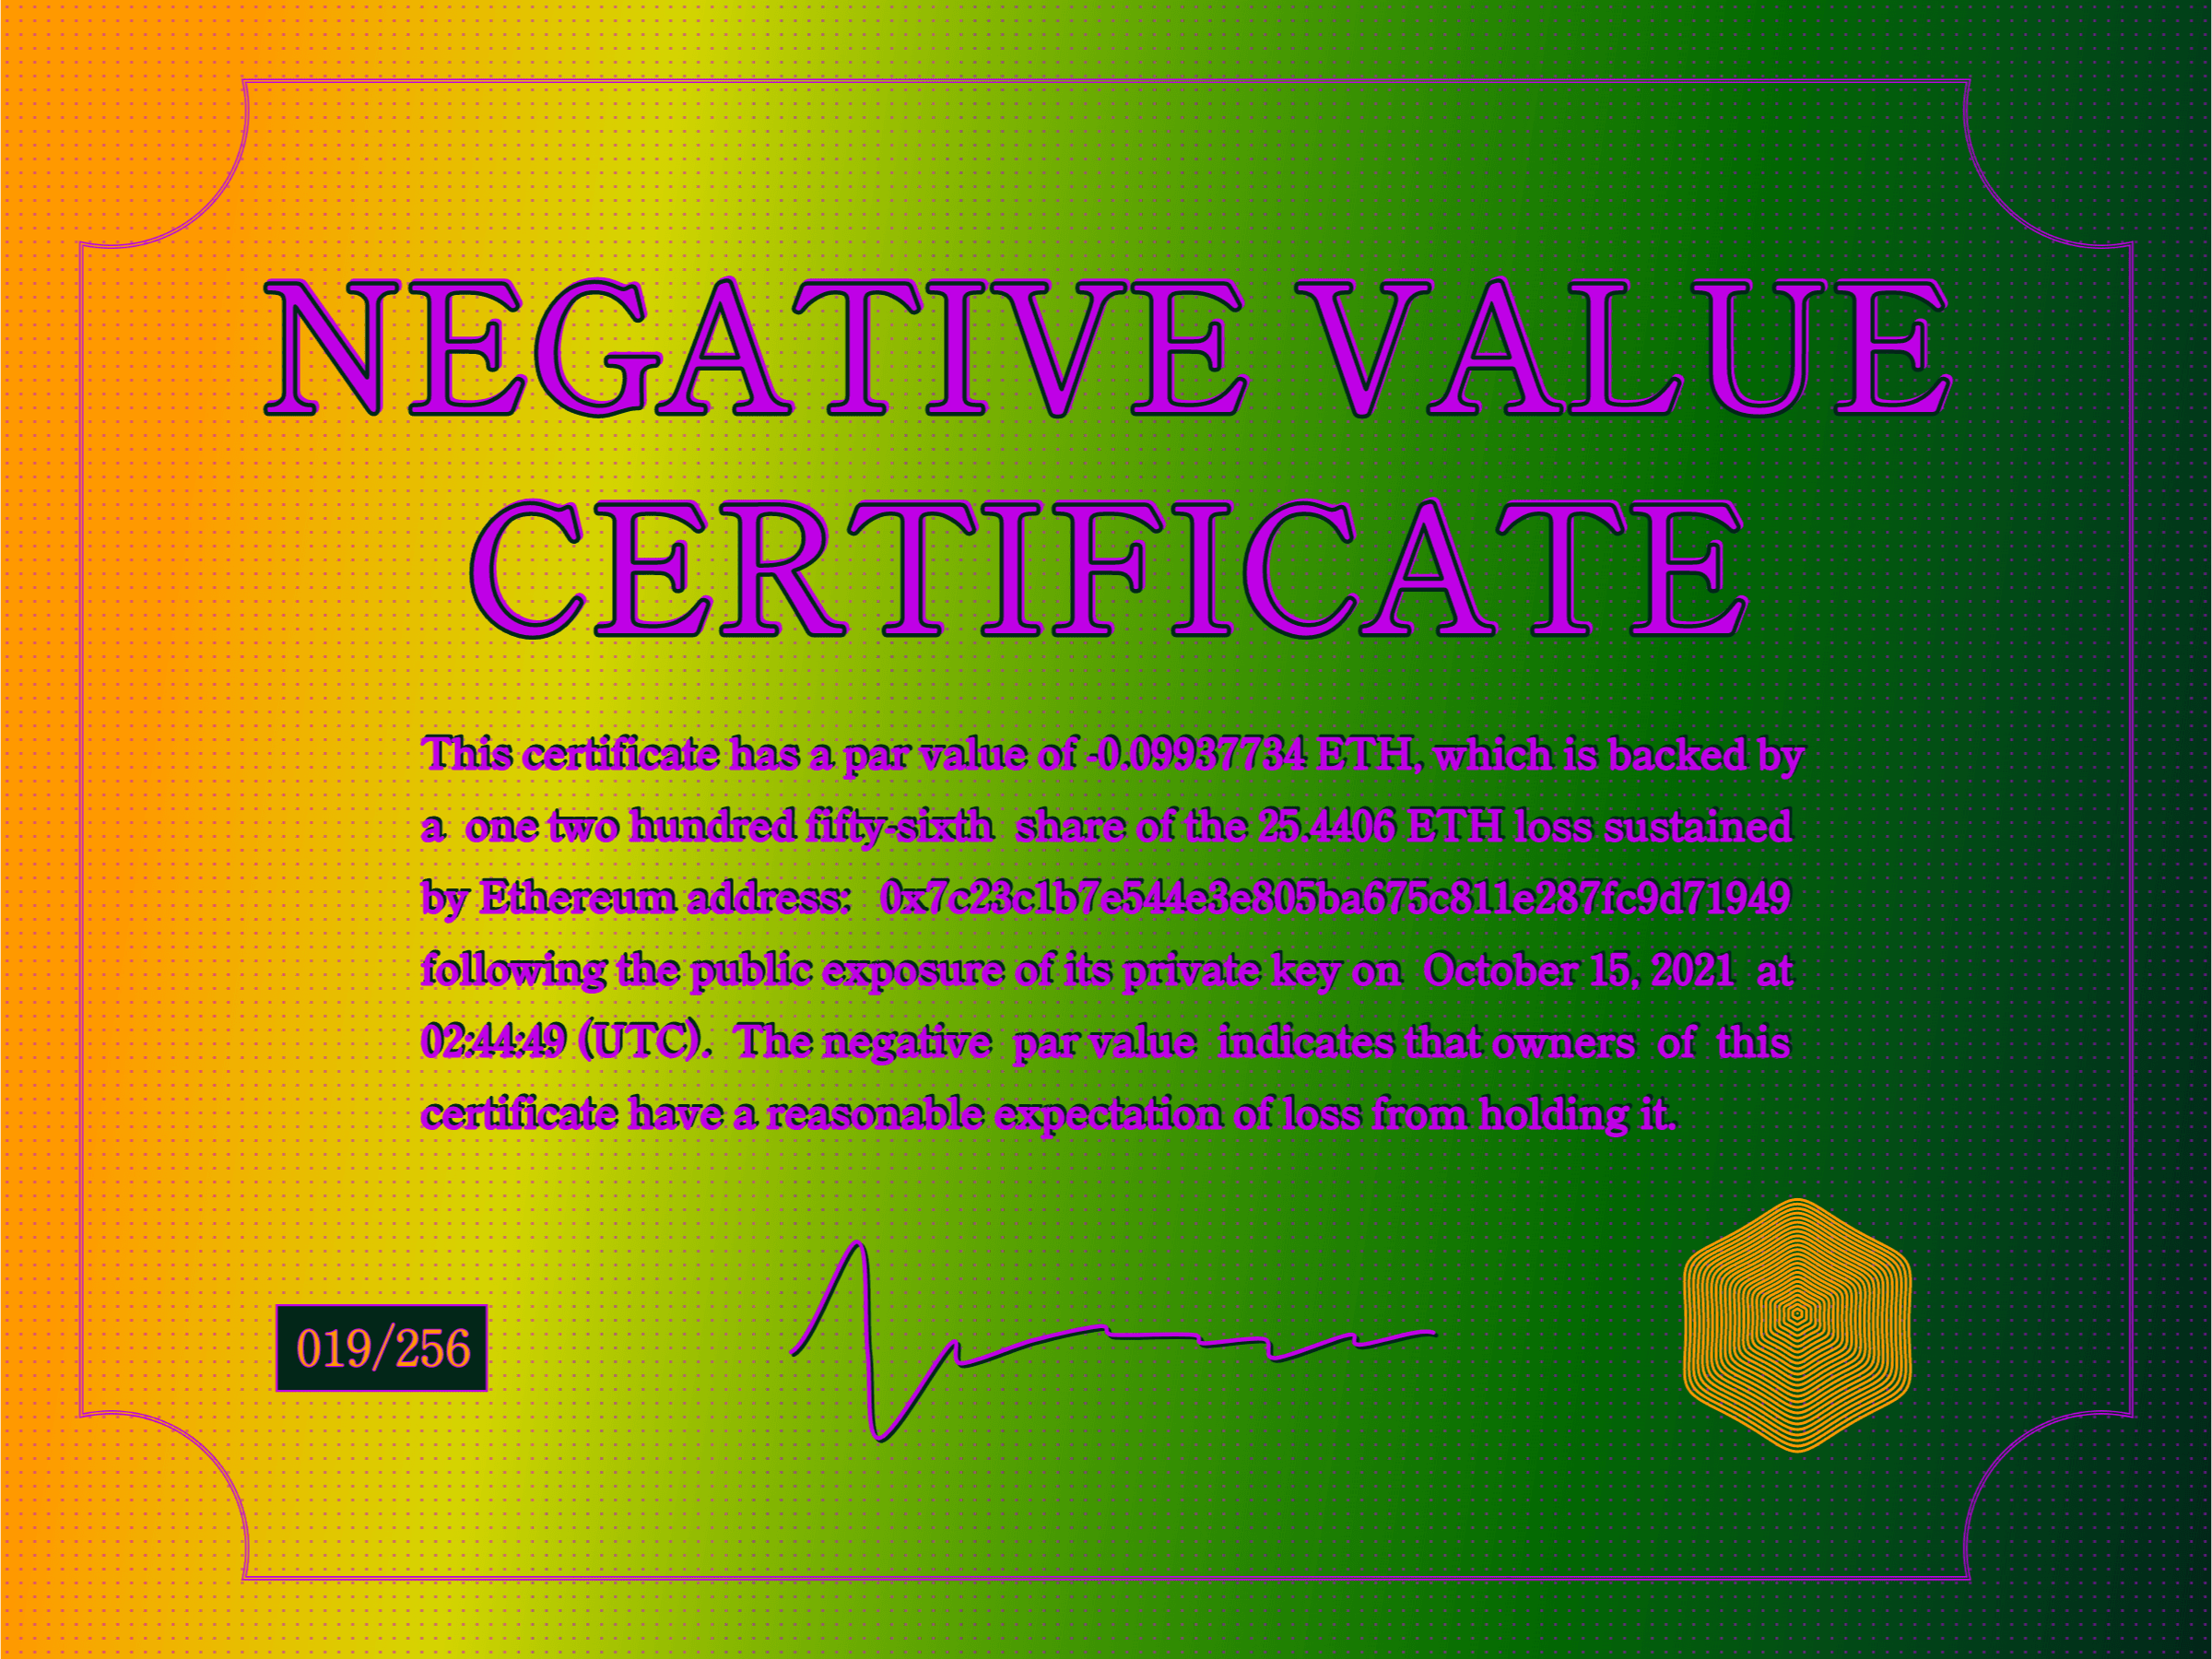 Negative Value Certificate #19 of 256